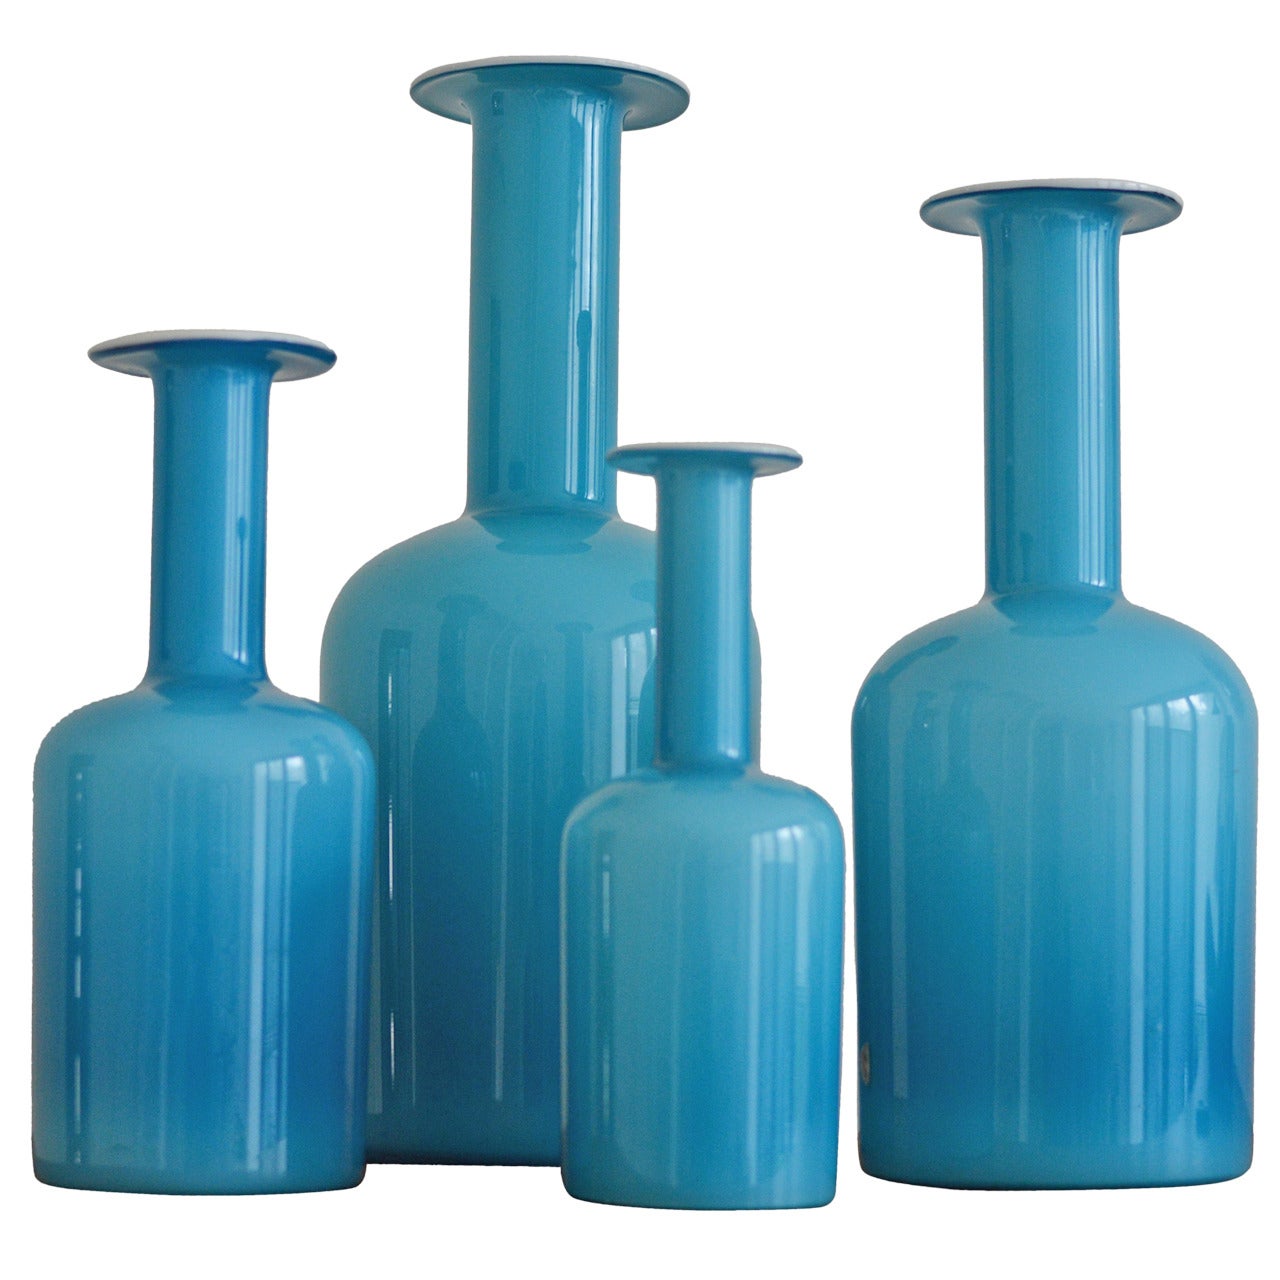 Turquoise "Gulvvase" Vases by Otto Brauer for Kastrup - Holmegaard